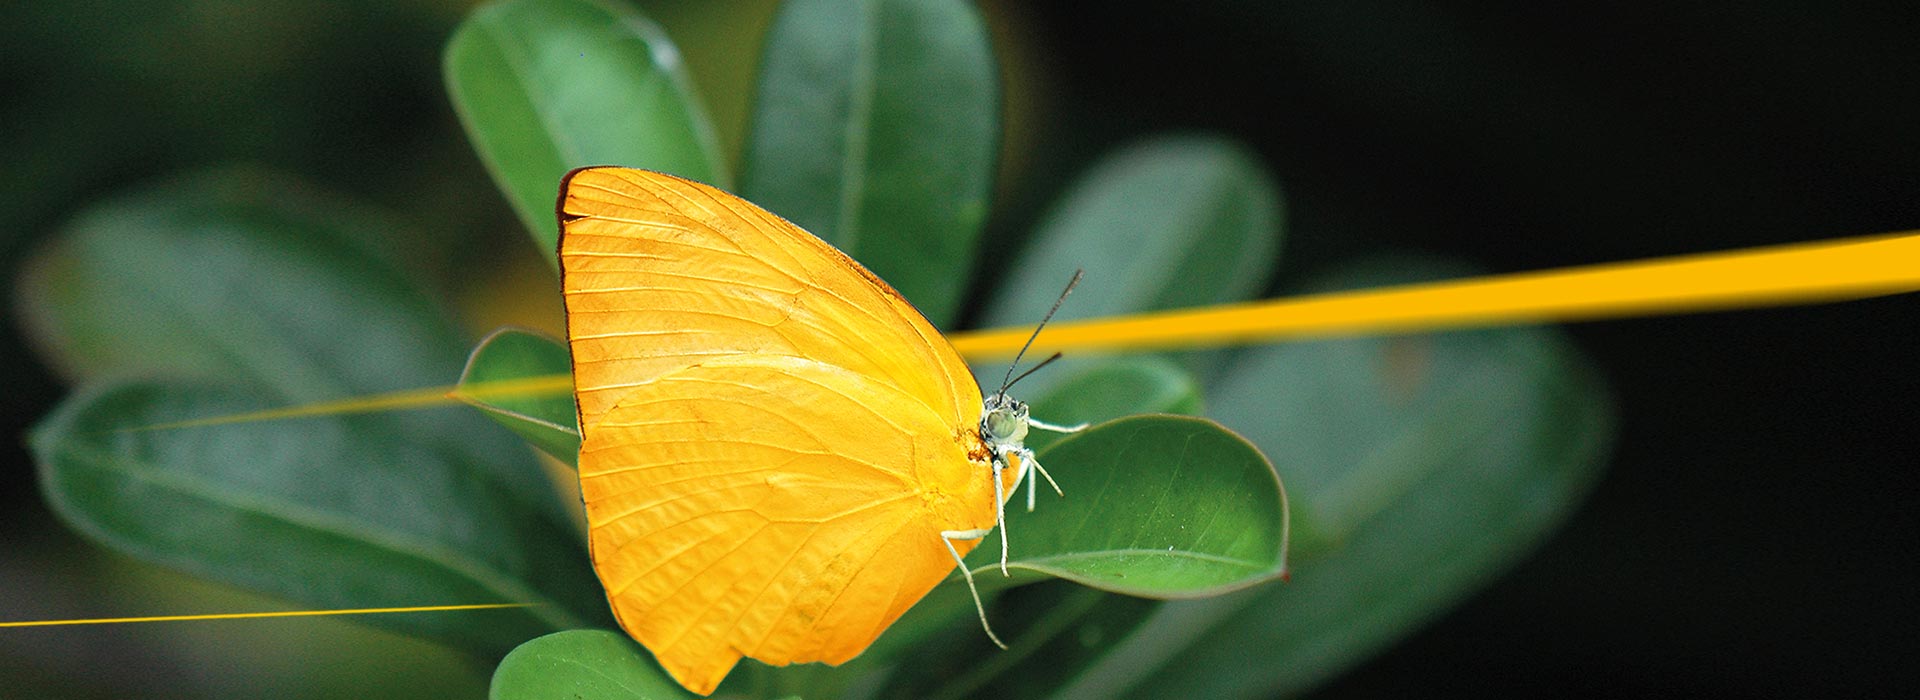 Butterfly on plant LGI